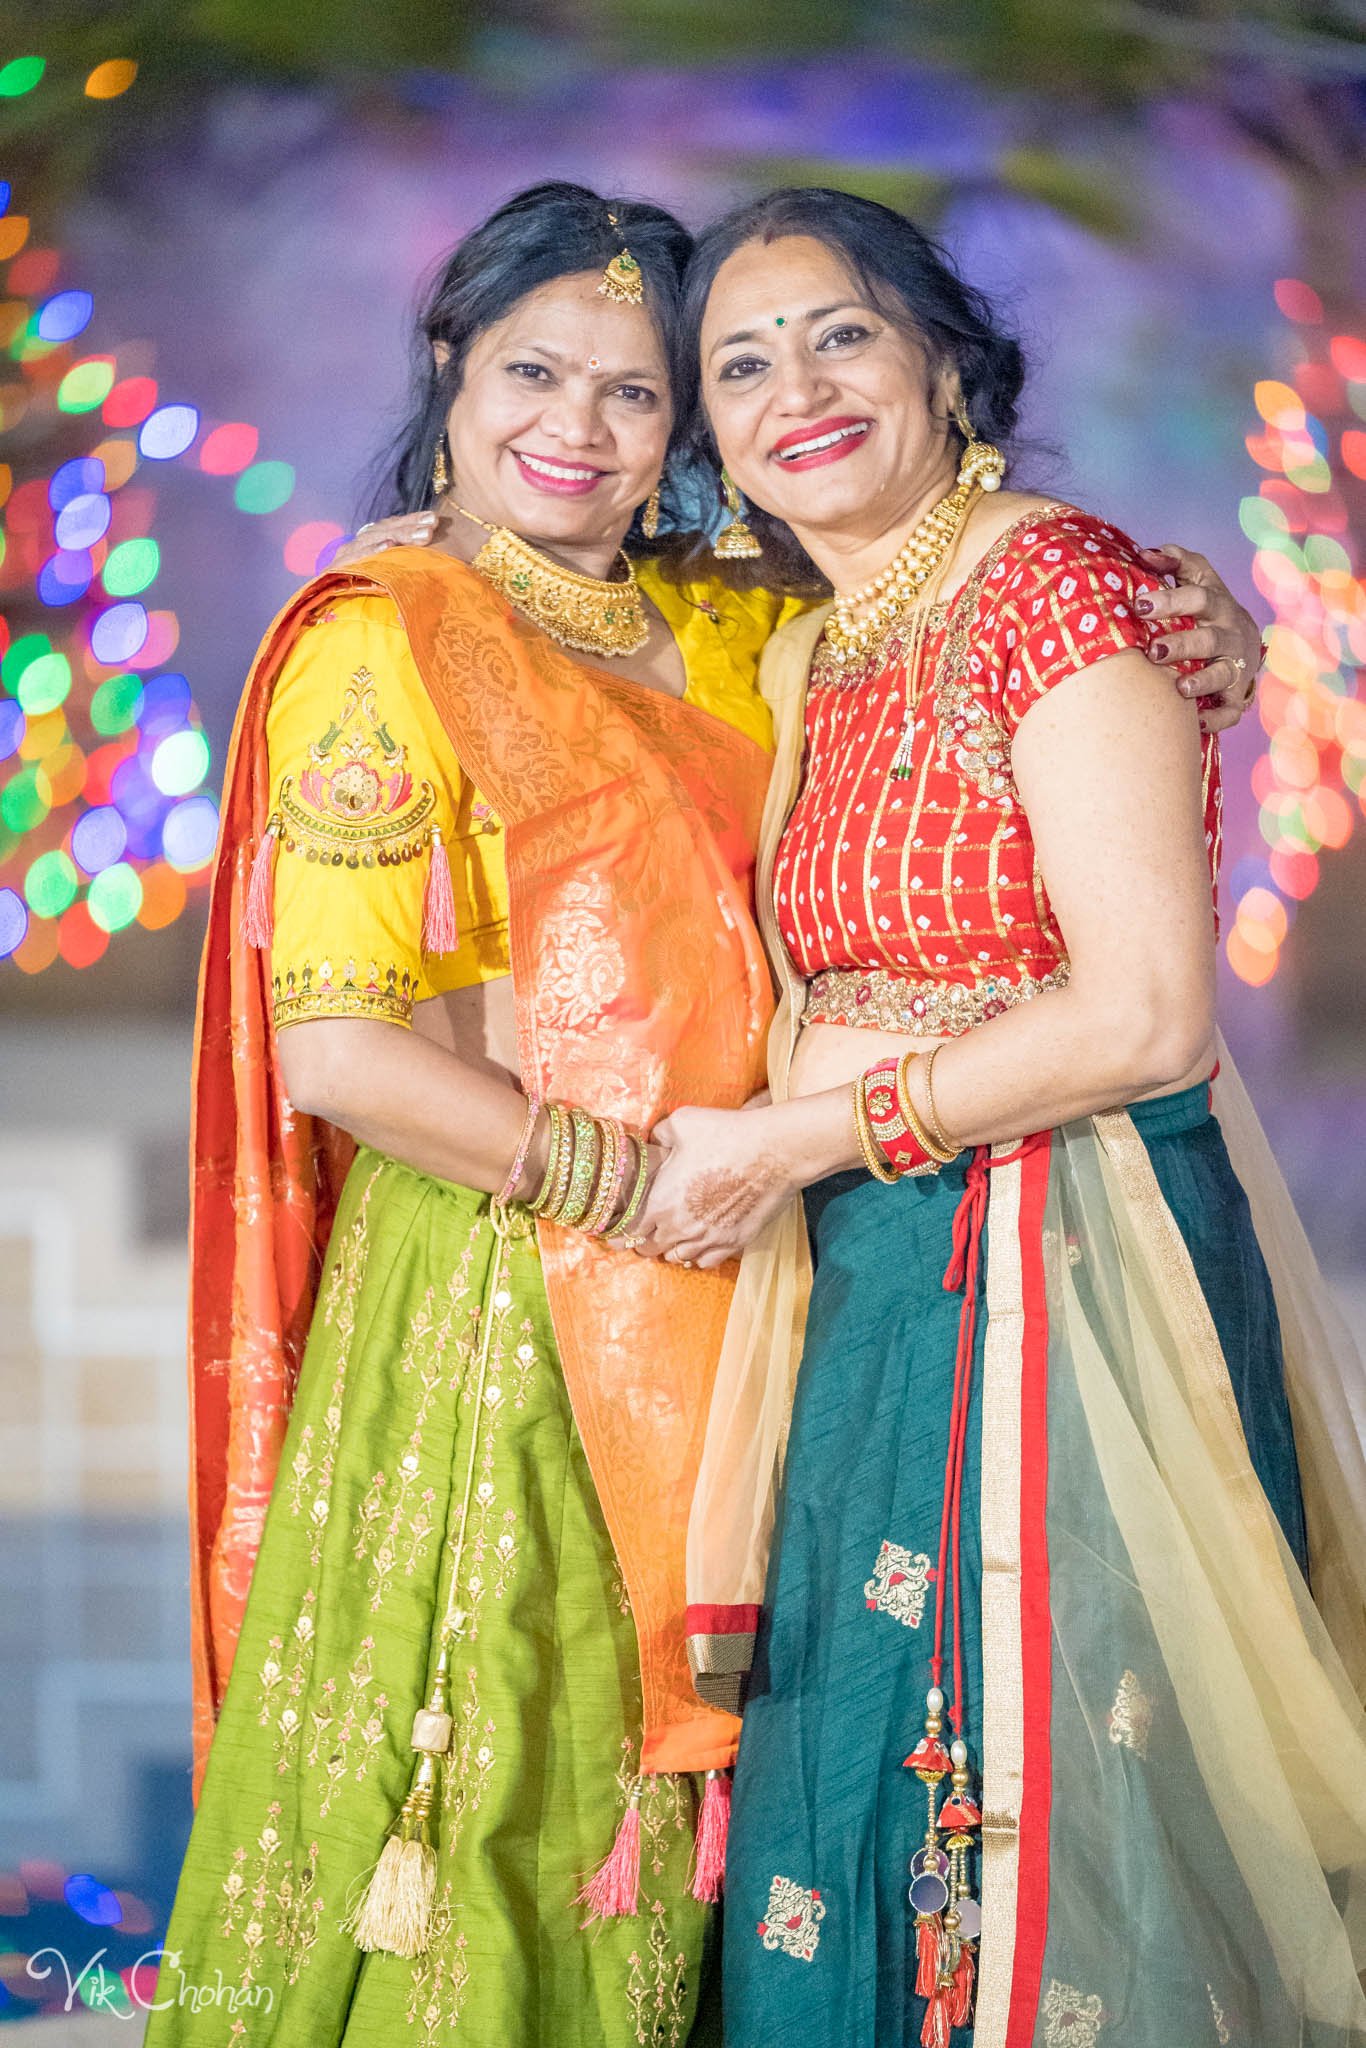 2022-02-04-Hely-&-Parth-Garba-Night-Indian-Wedding-Vik-Chohan-Photography-Photo-Booth-Social-Media-VCP-207.jpg